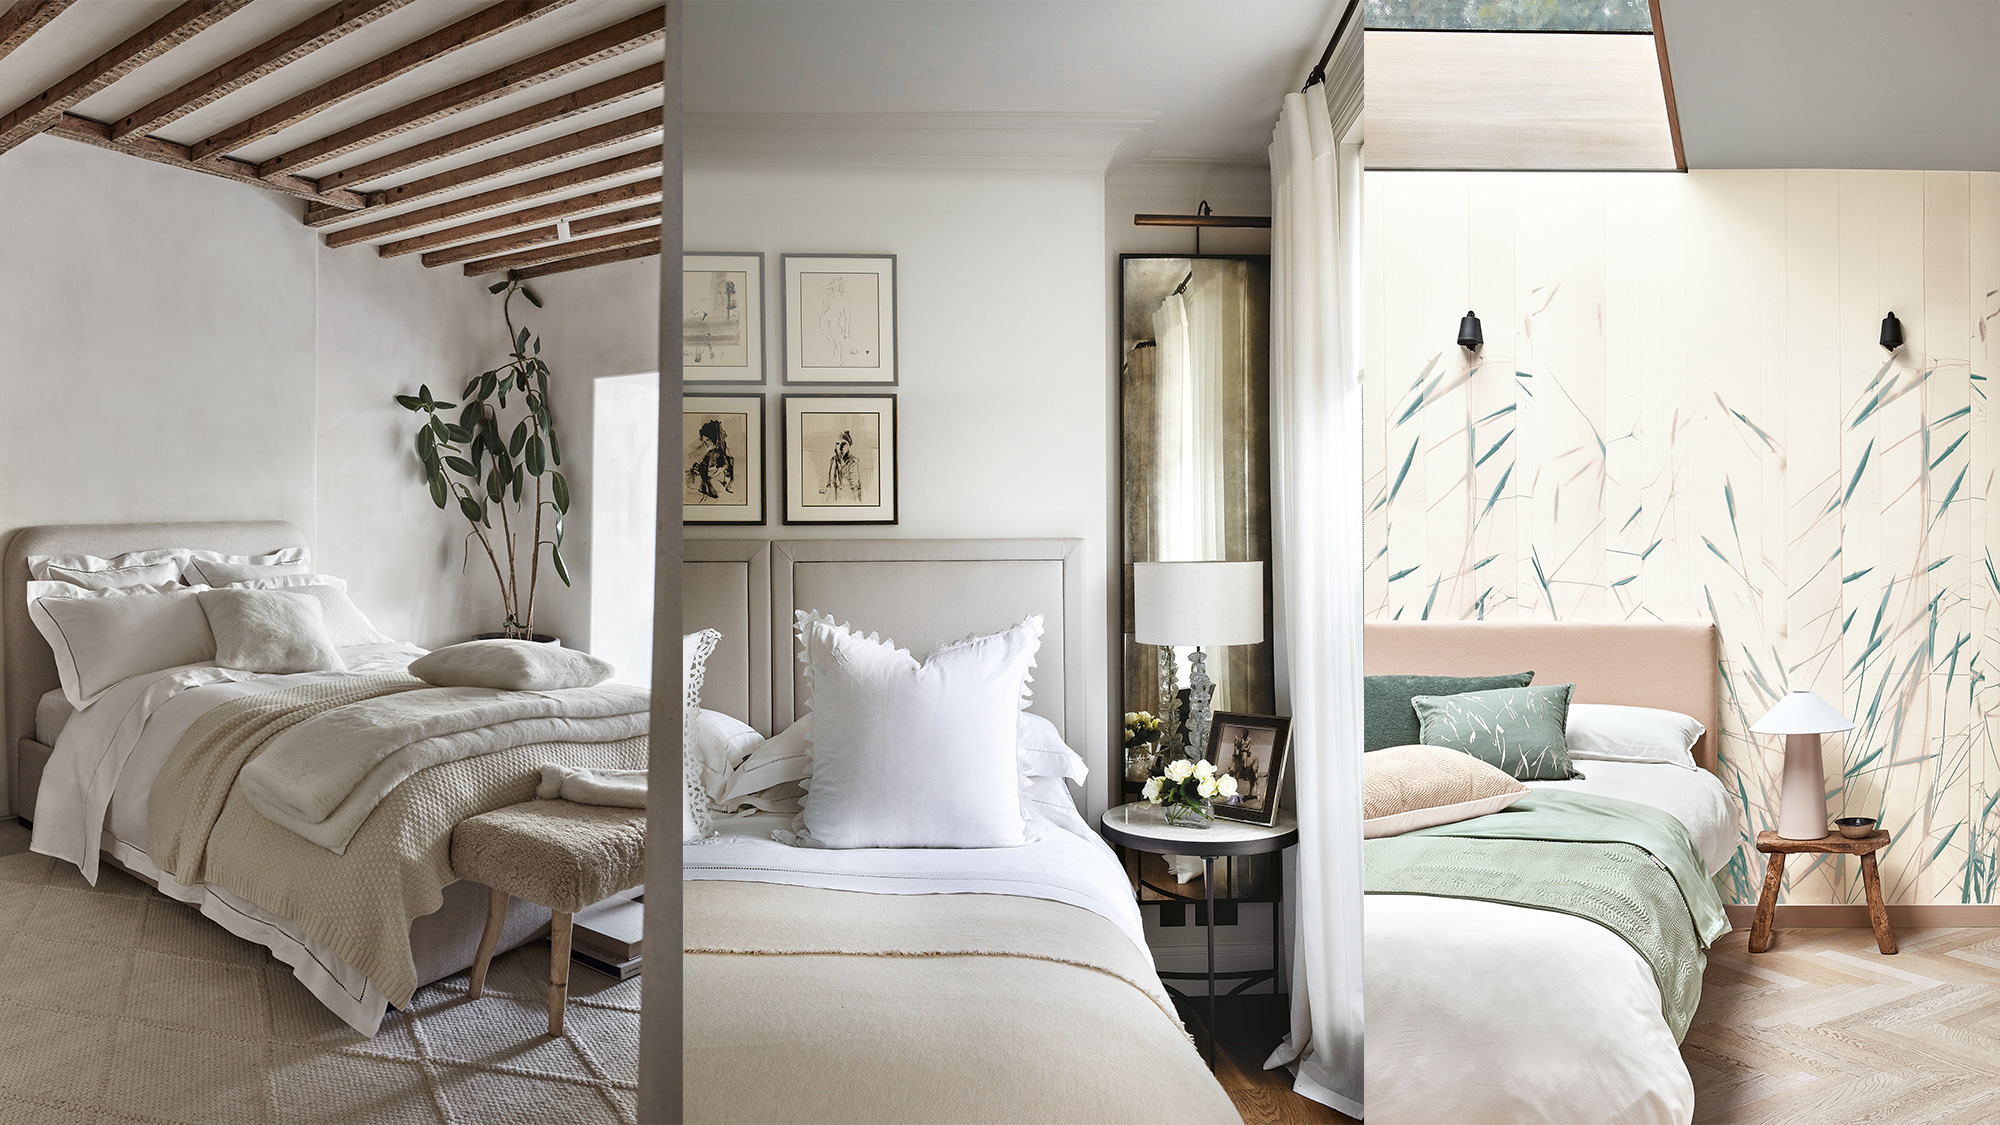 Cottage bedroom ideas – design inspiration for cozy restful spaces